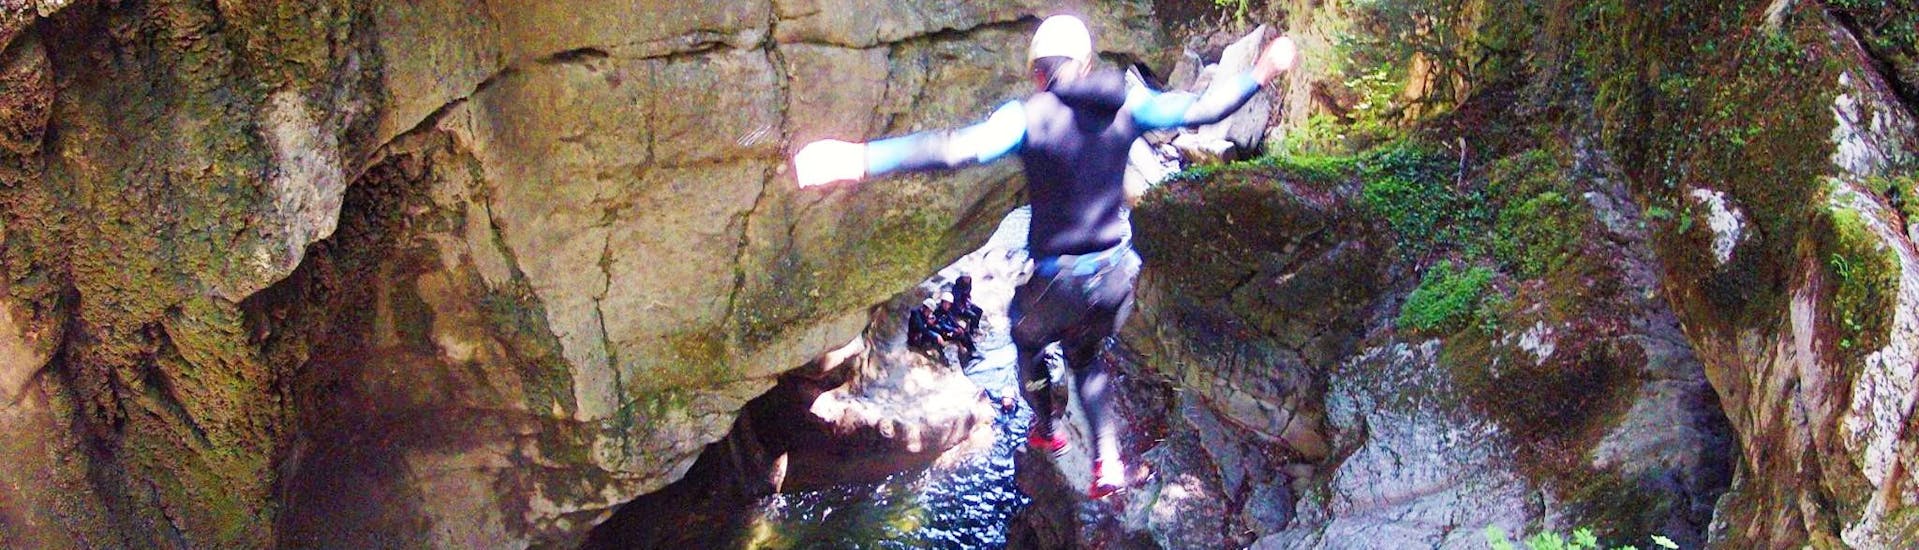 adventurous-canyoning-in-the-canyon-pont-du-diable-takamaka-aix-les-bains-hero